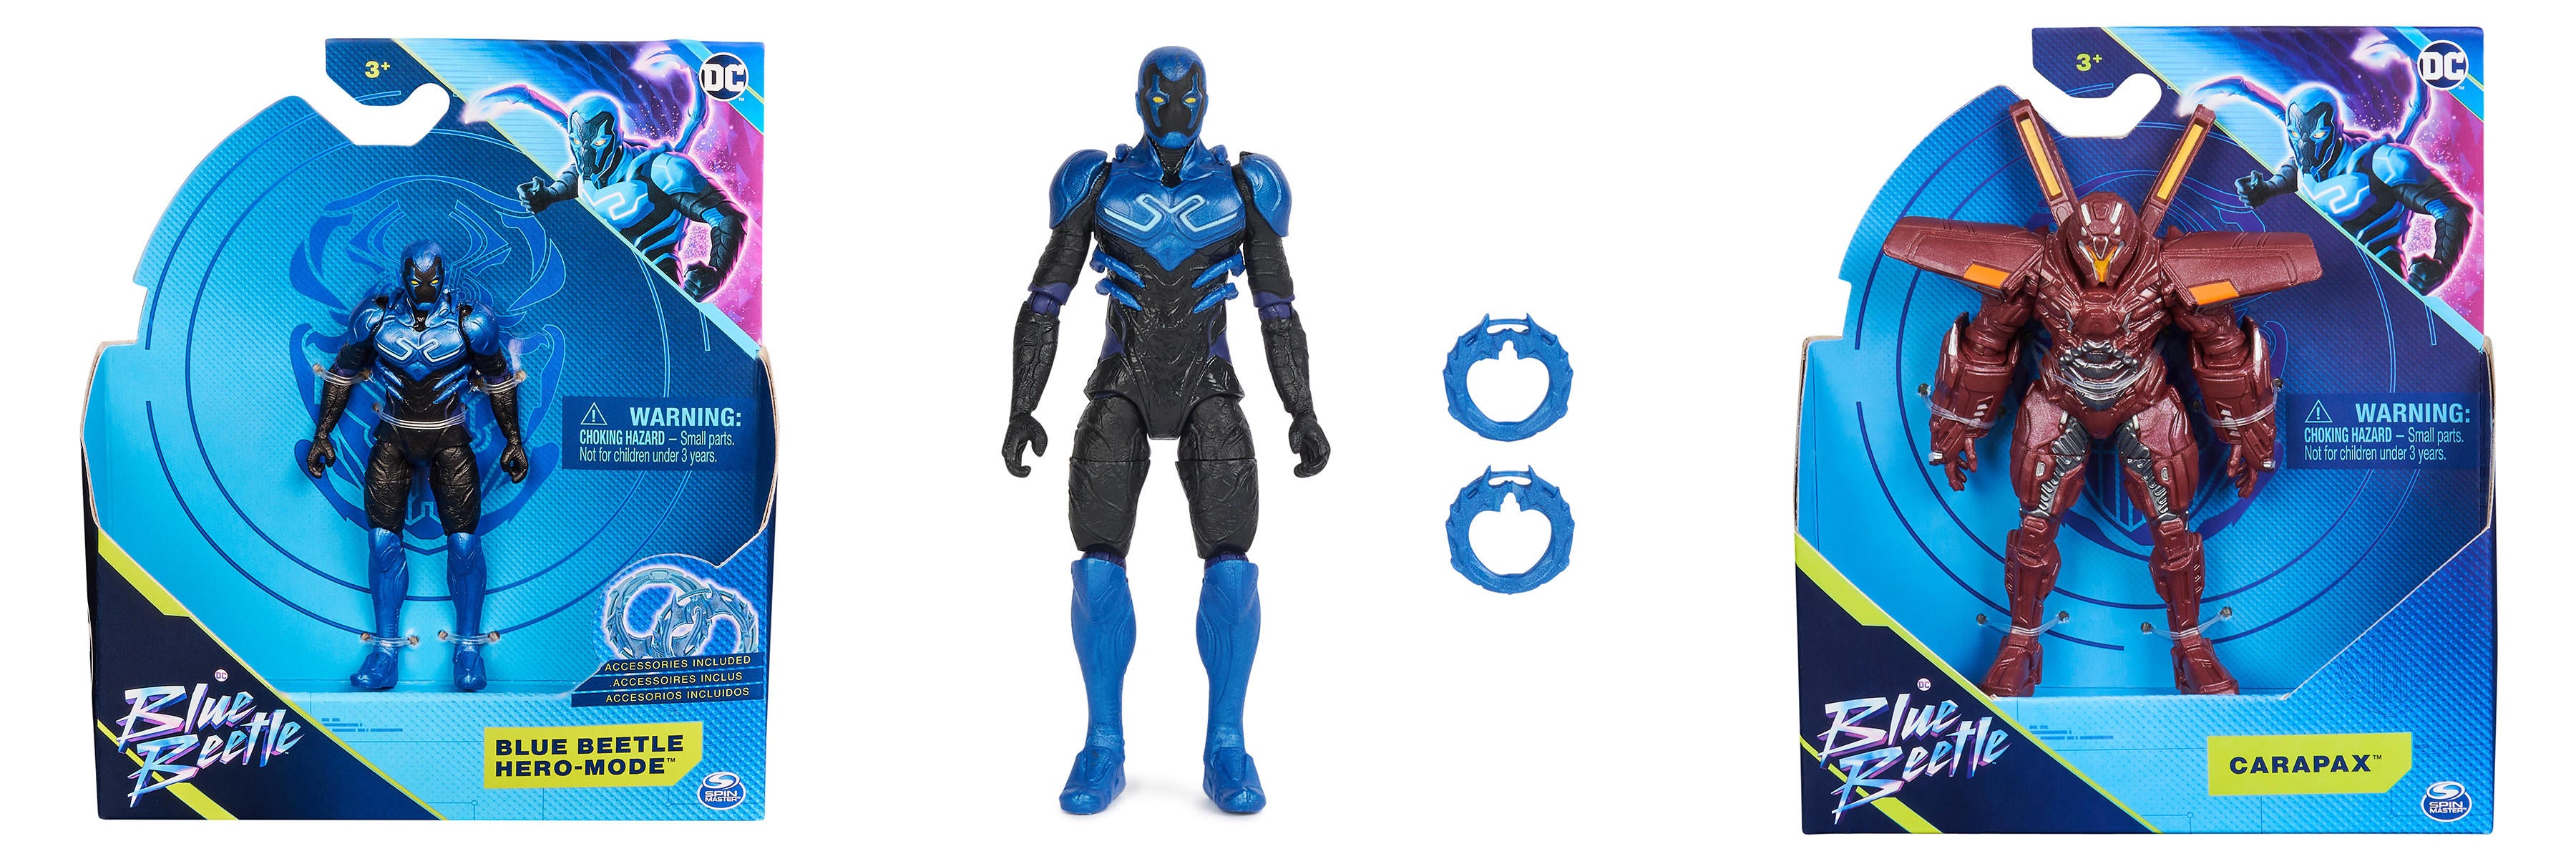 blue-beetle-spin-master-4-inch-figures.jpg